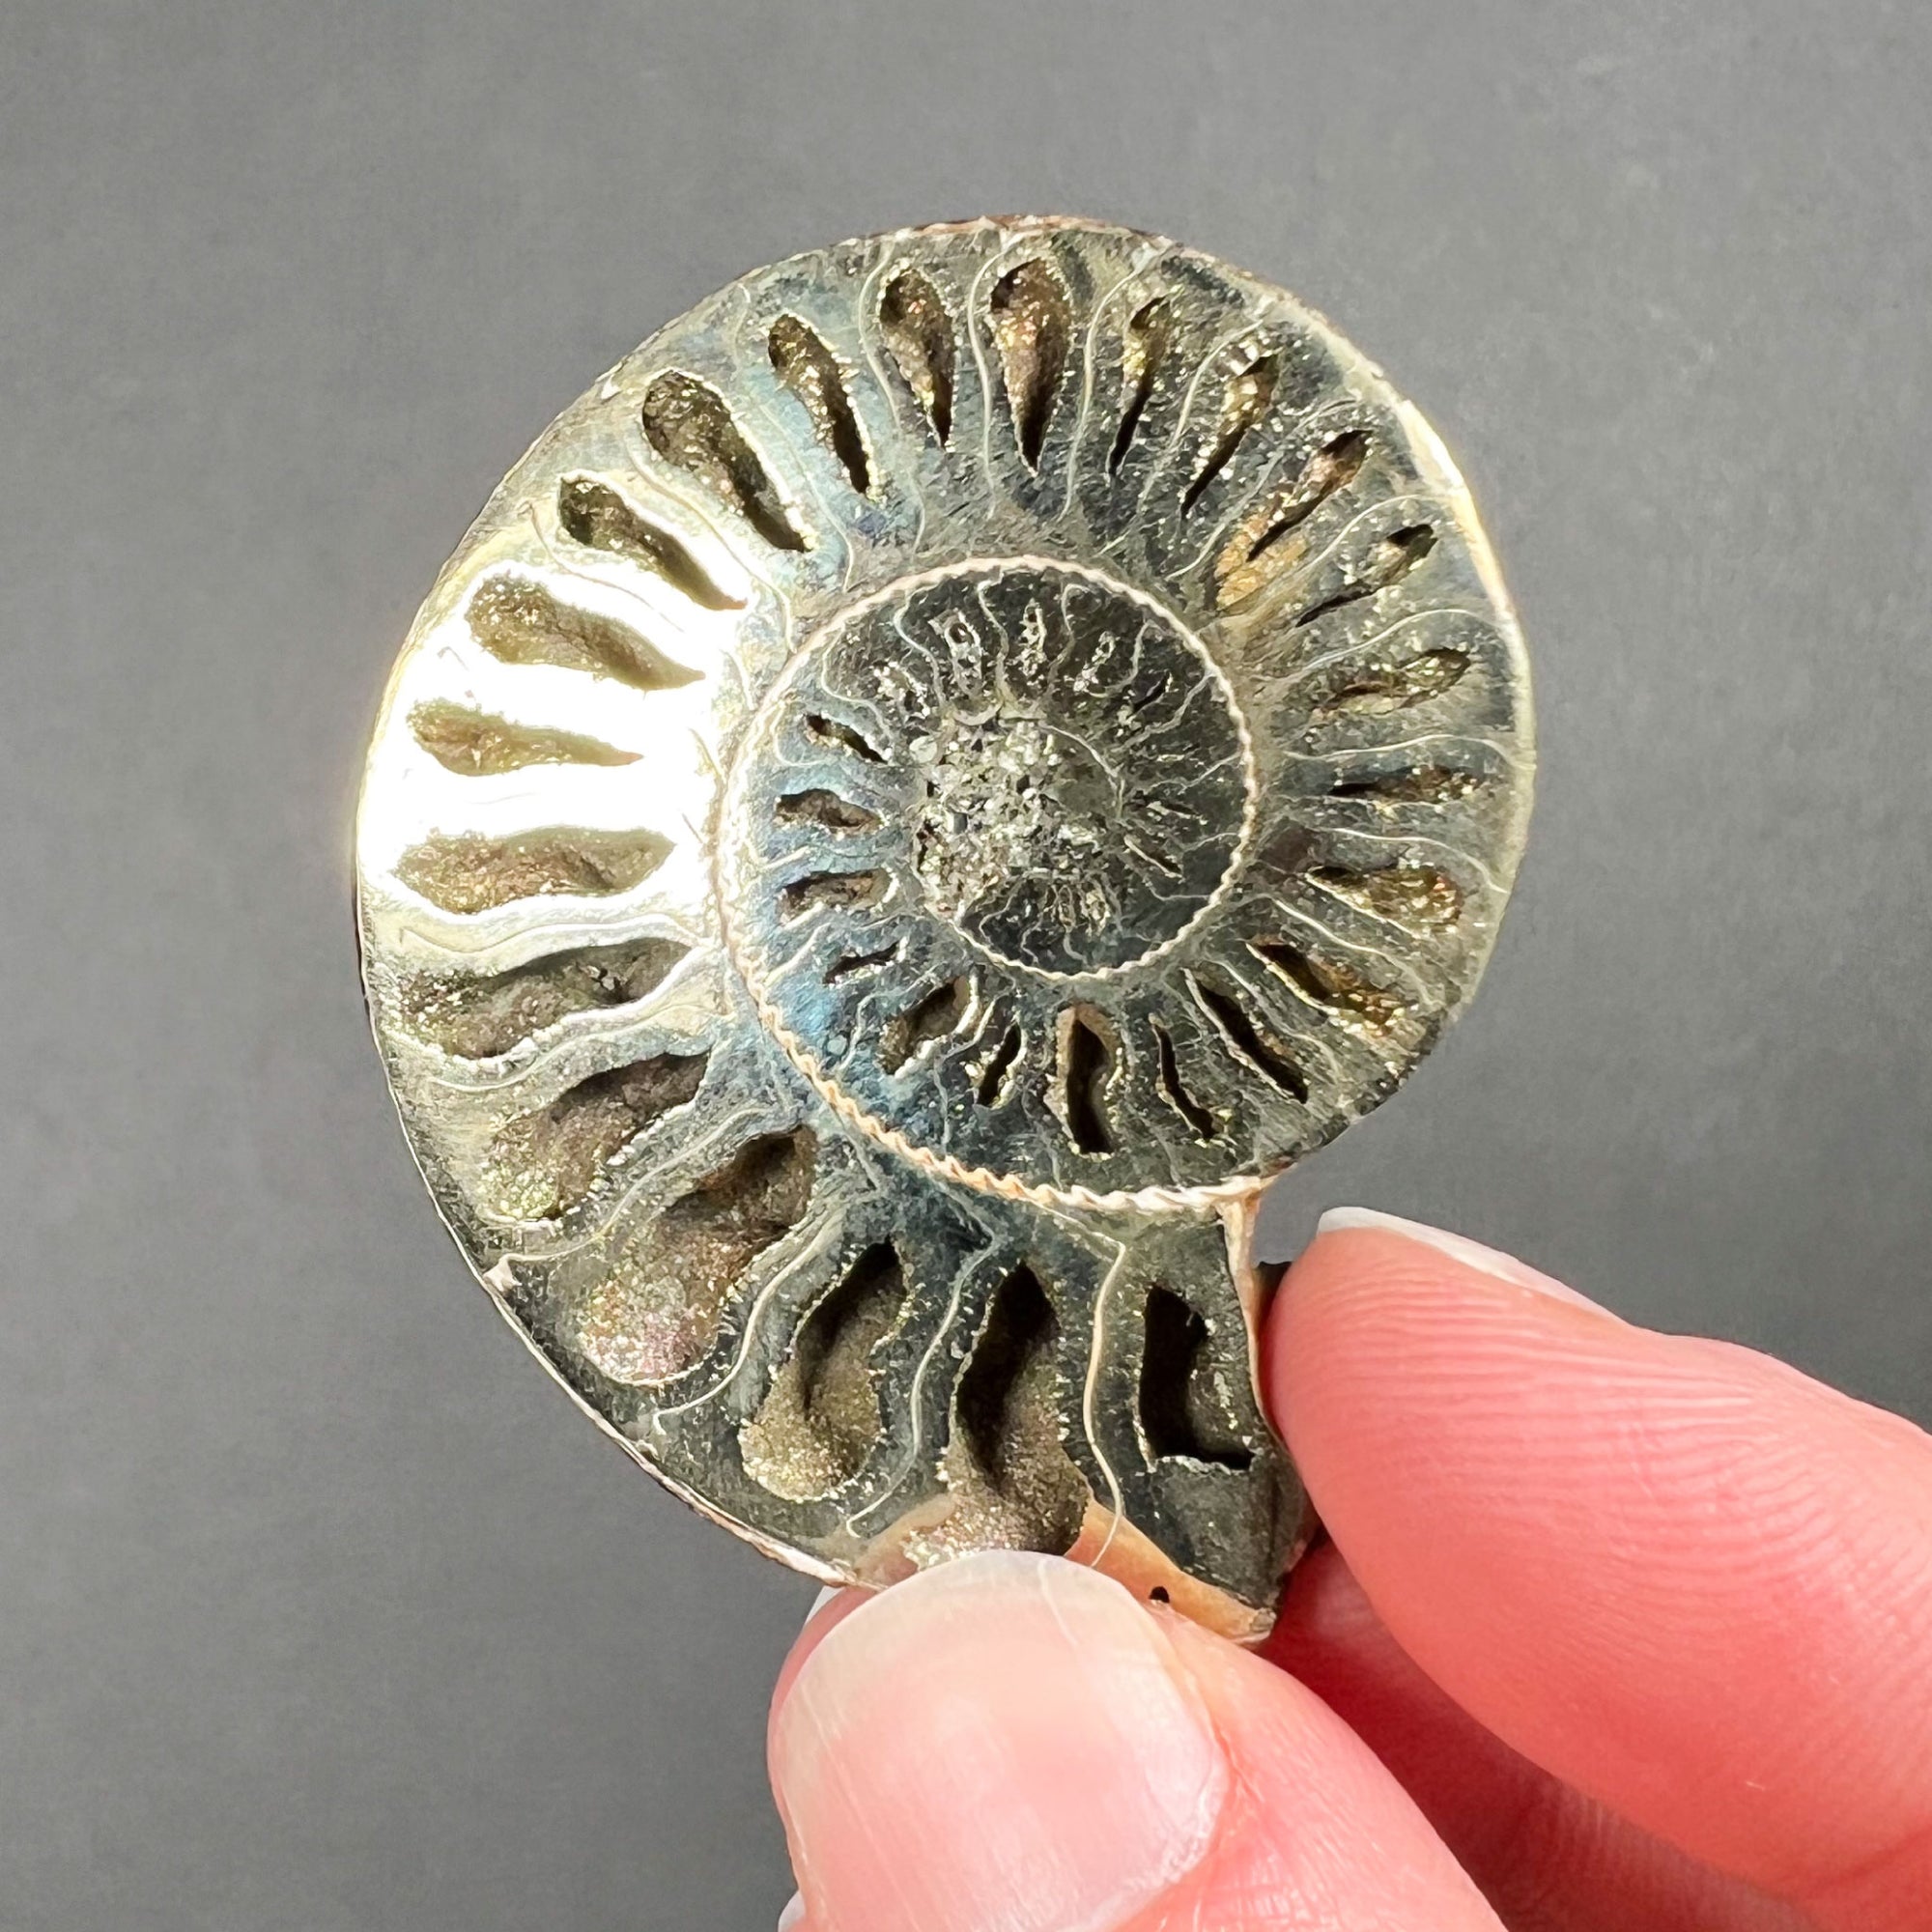 Naturally Pyrite Coated Ammonite Shell